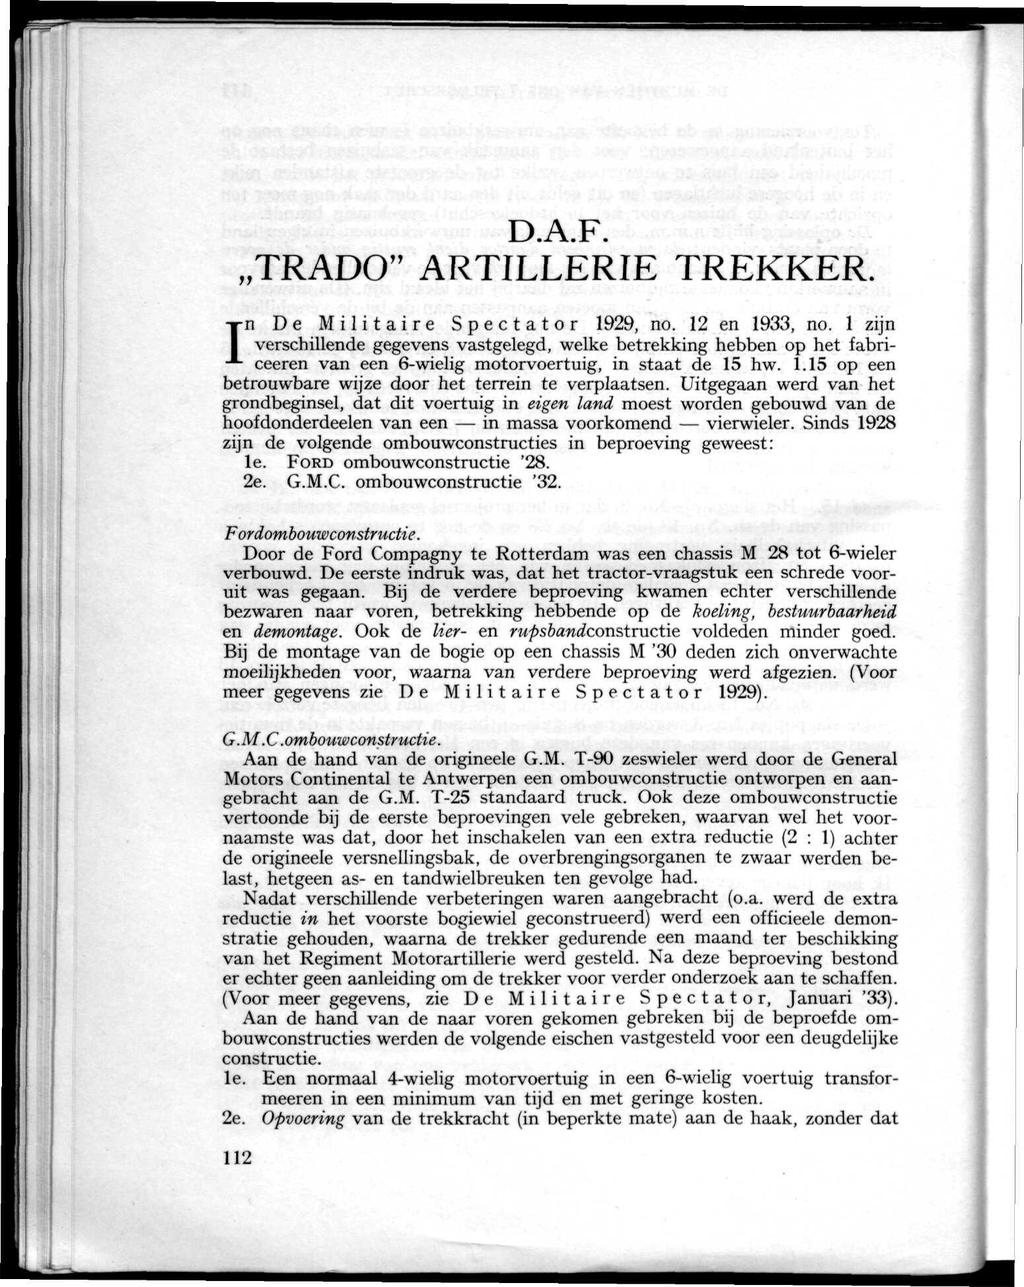 D.A.F. TRADO" ARTILLERIE TREKKER. In De Militaire Spectator 1929, no. 12 en 1933, no.